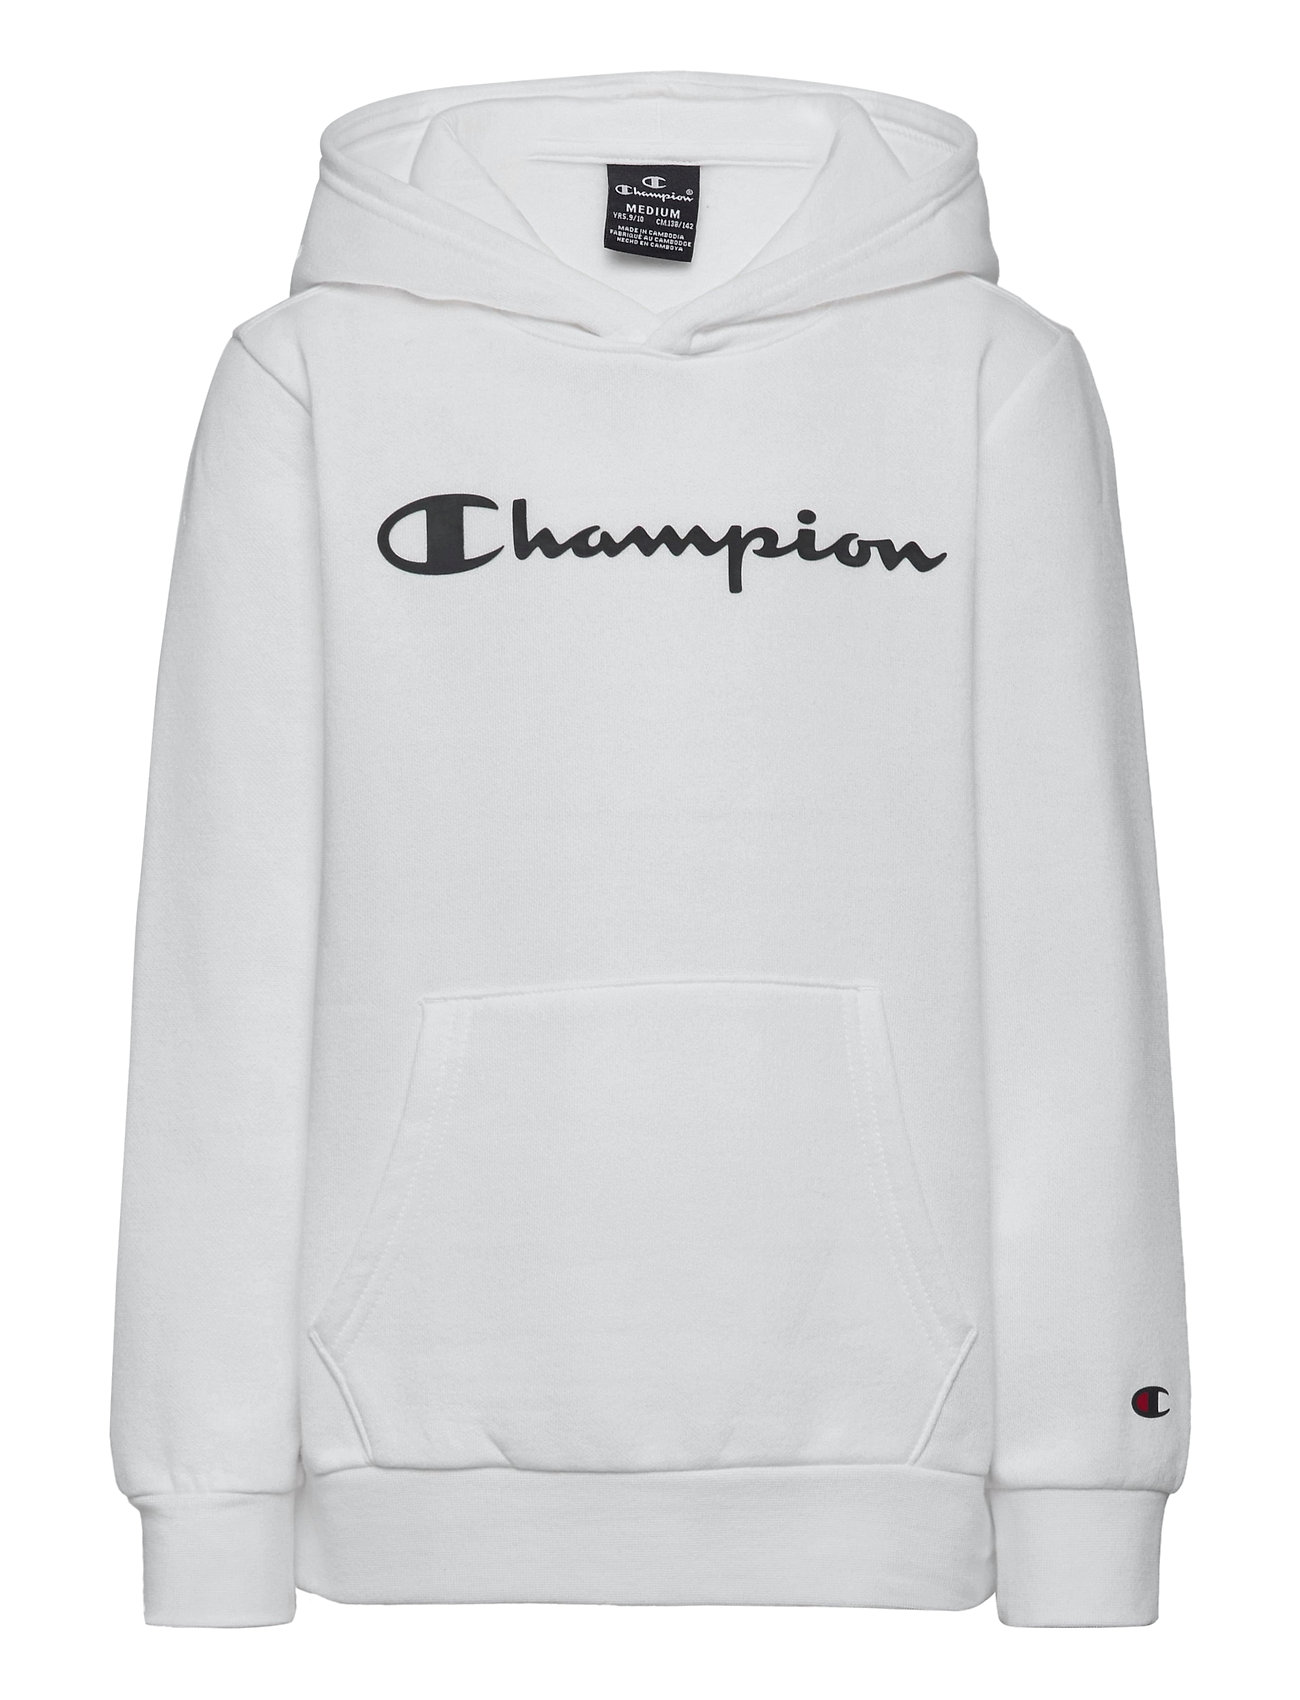 billig molekyle Overflødig Sort Champion Hooded Sweatshirt Hoodie Trøje Hvid Champion hoodies for børn  - Pashion.dk